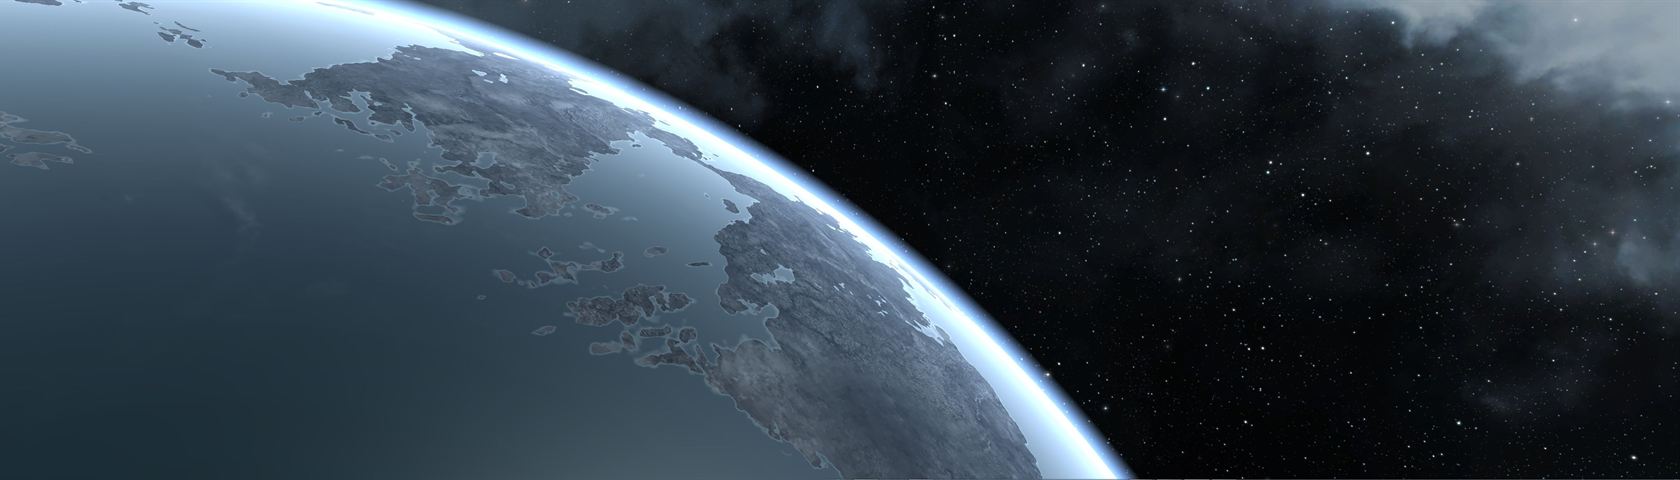 Extra Terrestrial Earth